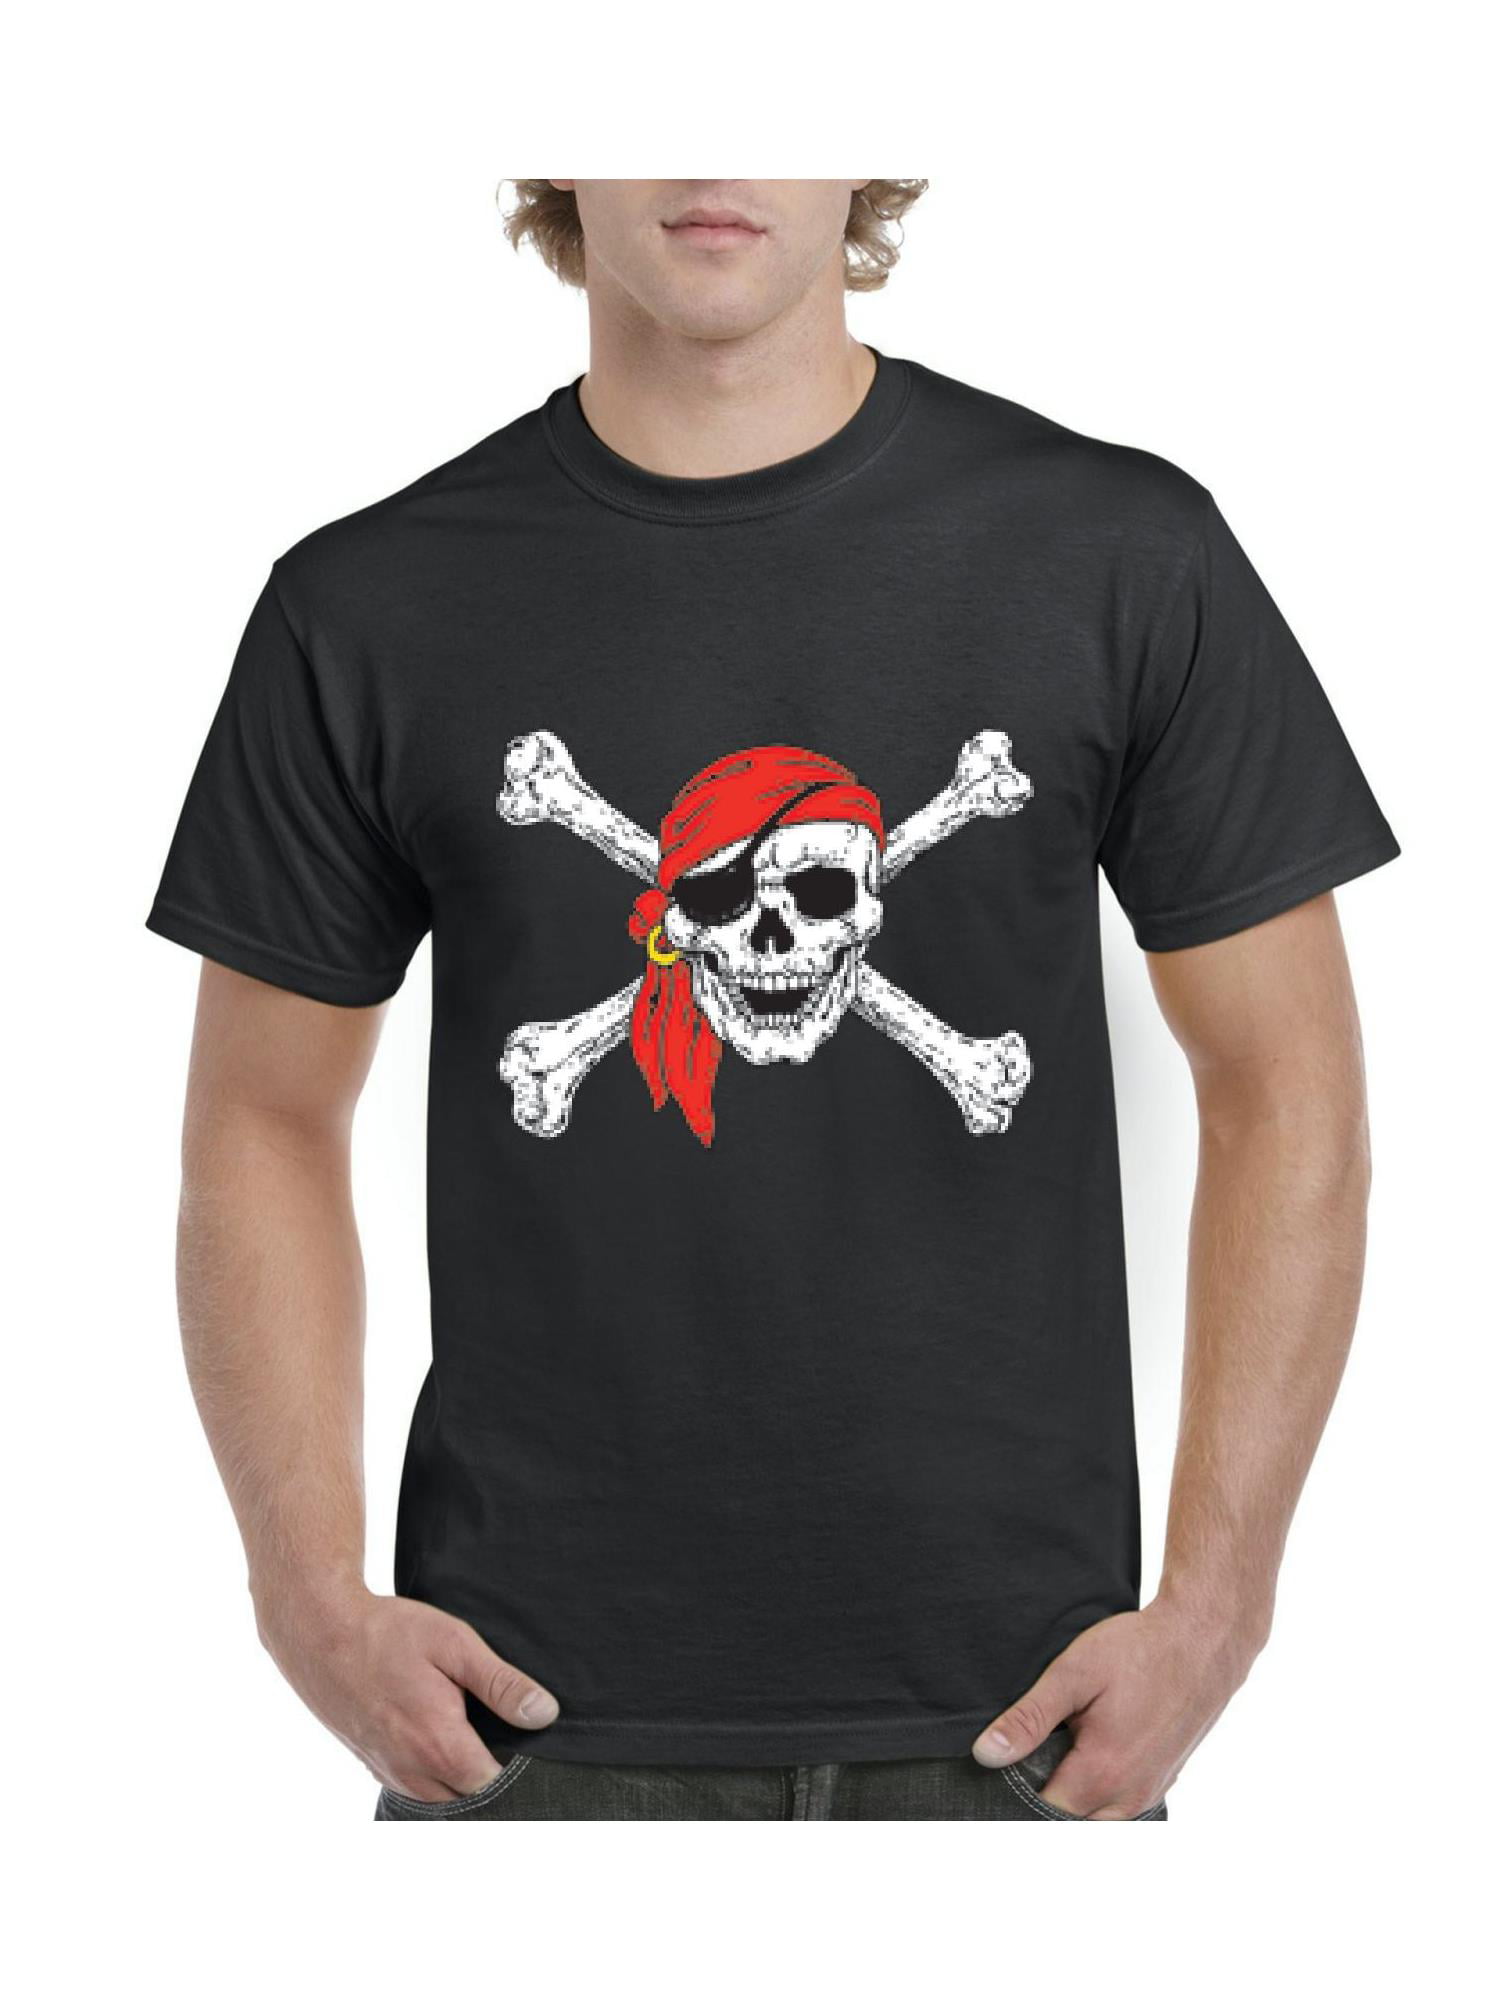 Hawaii Pirate Skull Cross Bones Logo Mens Tee Shirt